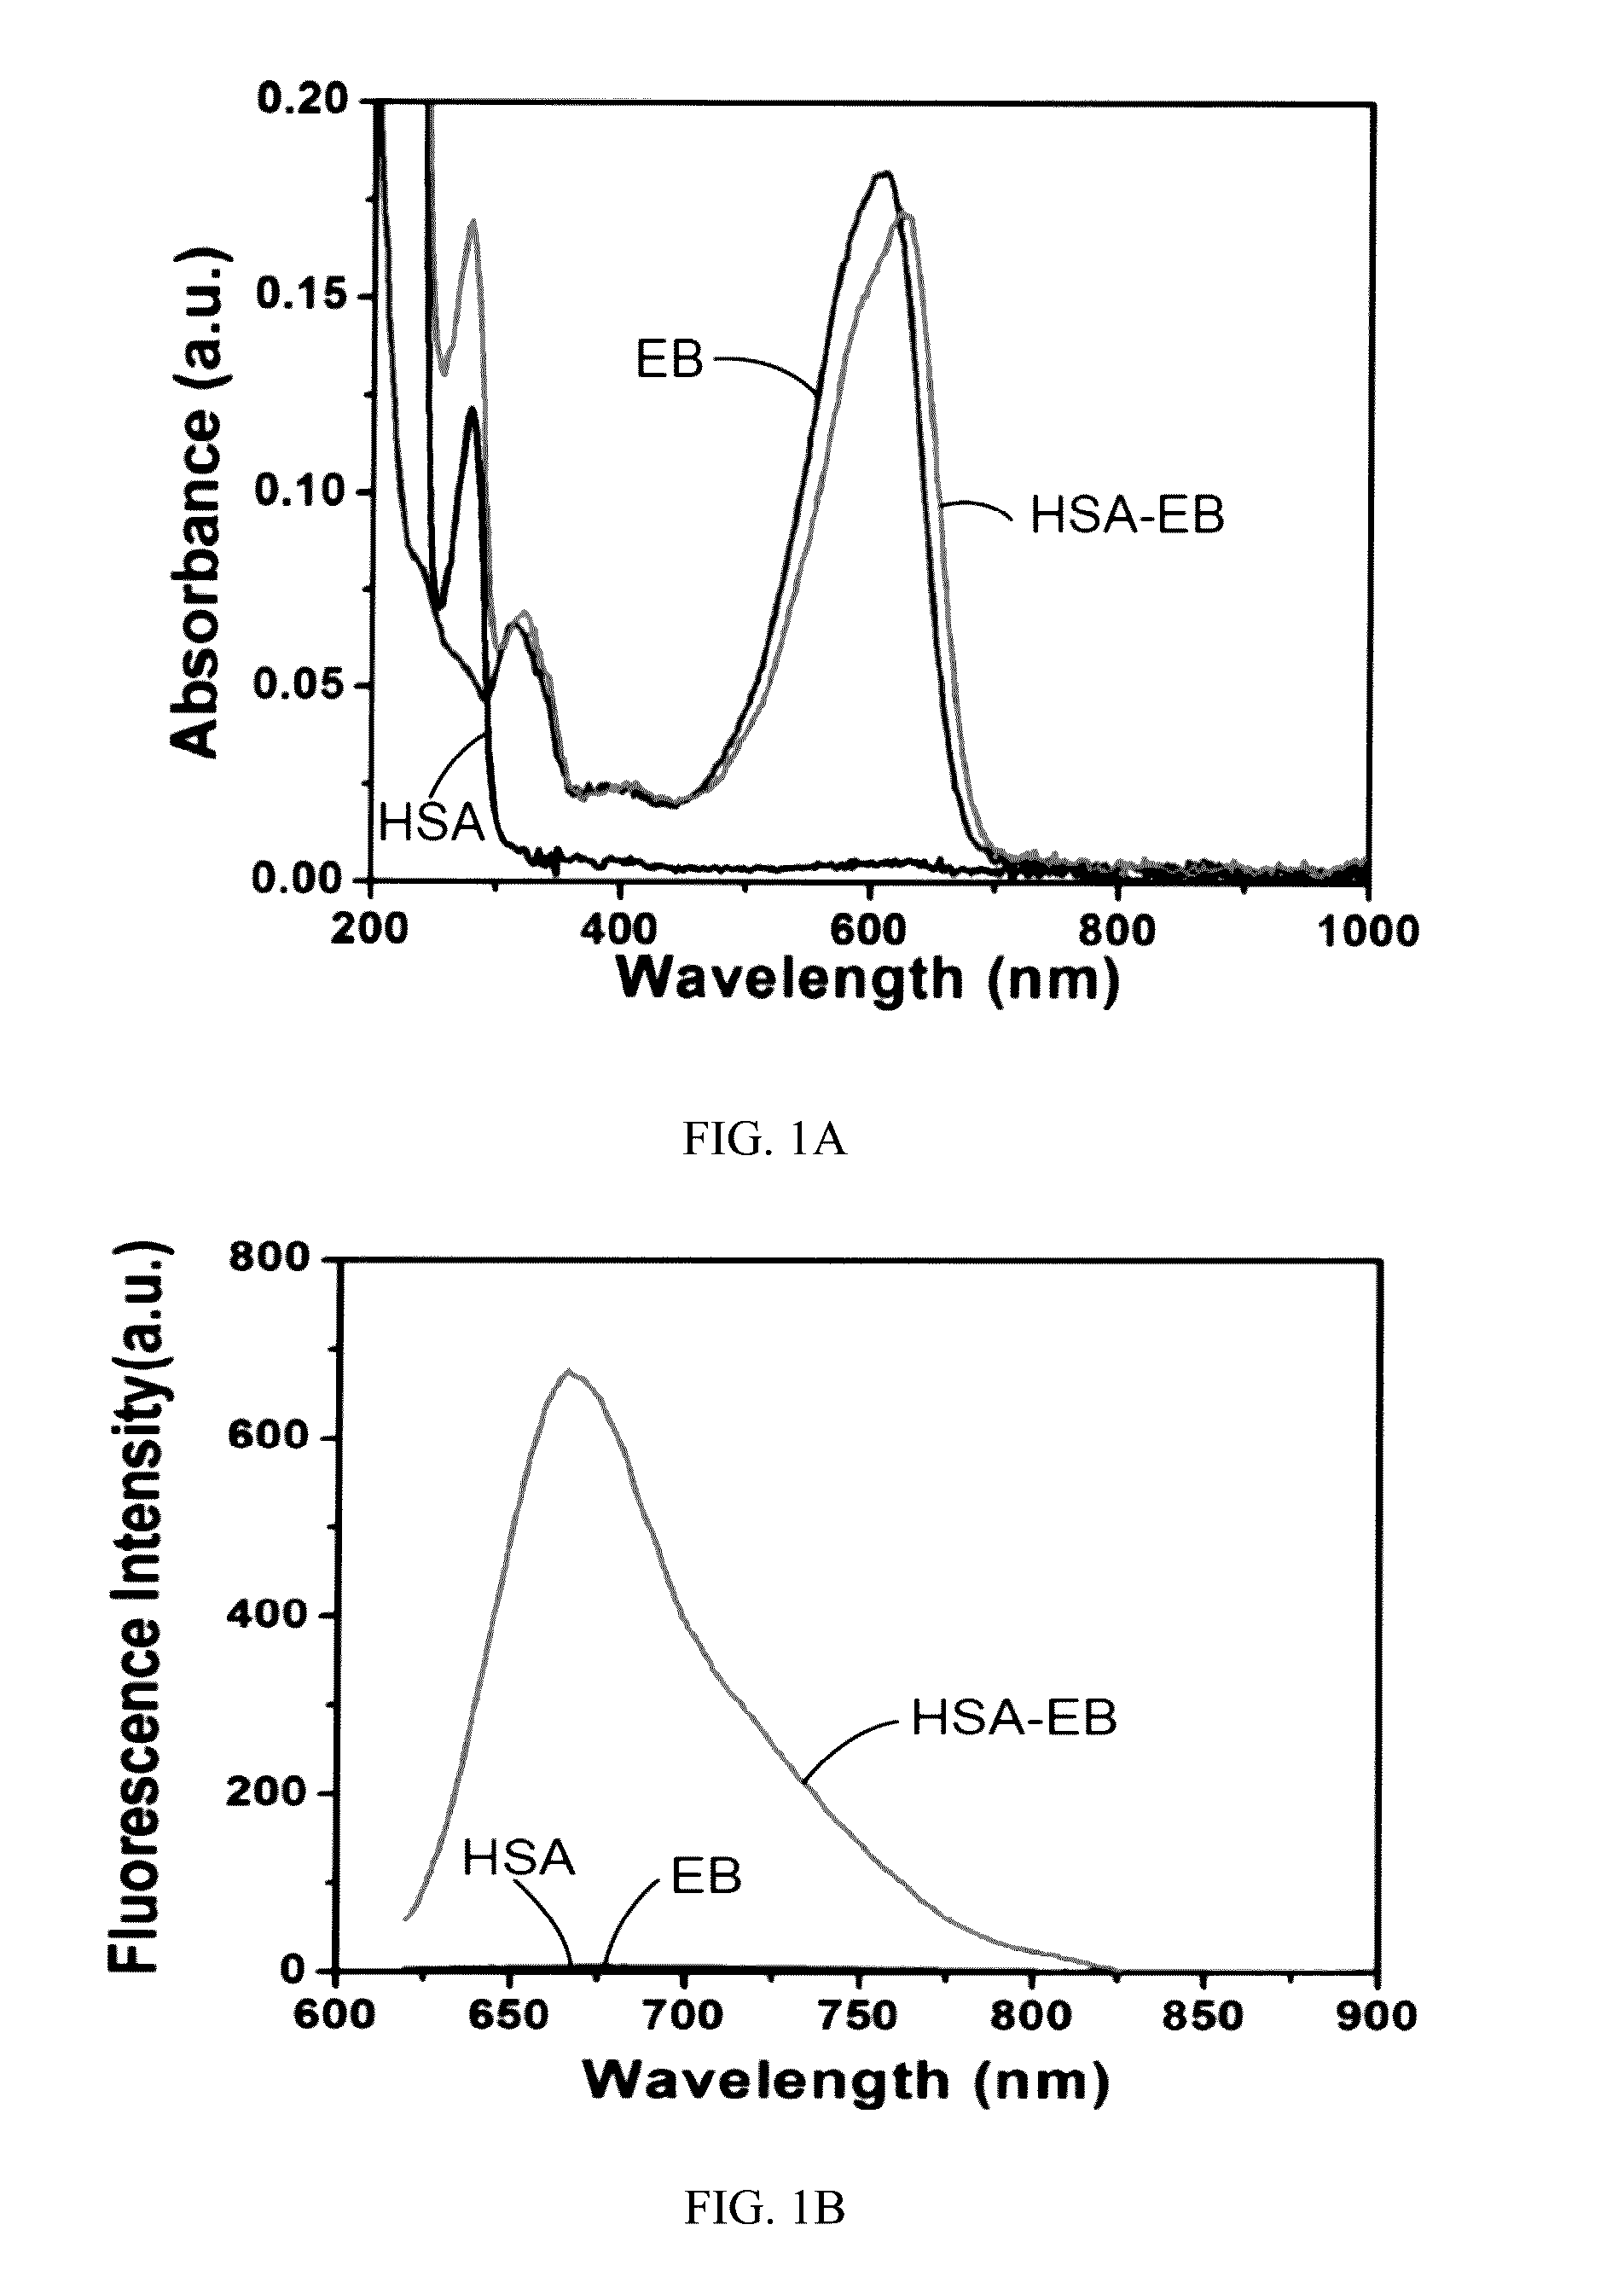 Labeled evans blue dye derivative for in vivo serum albumin labeling